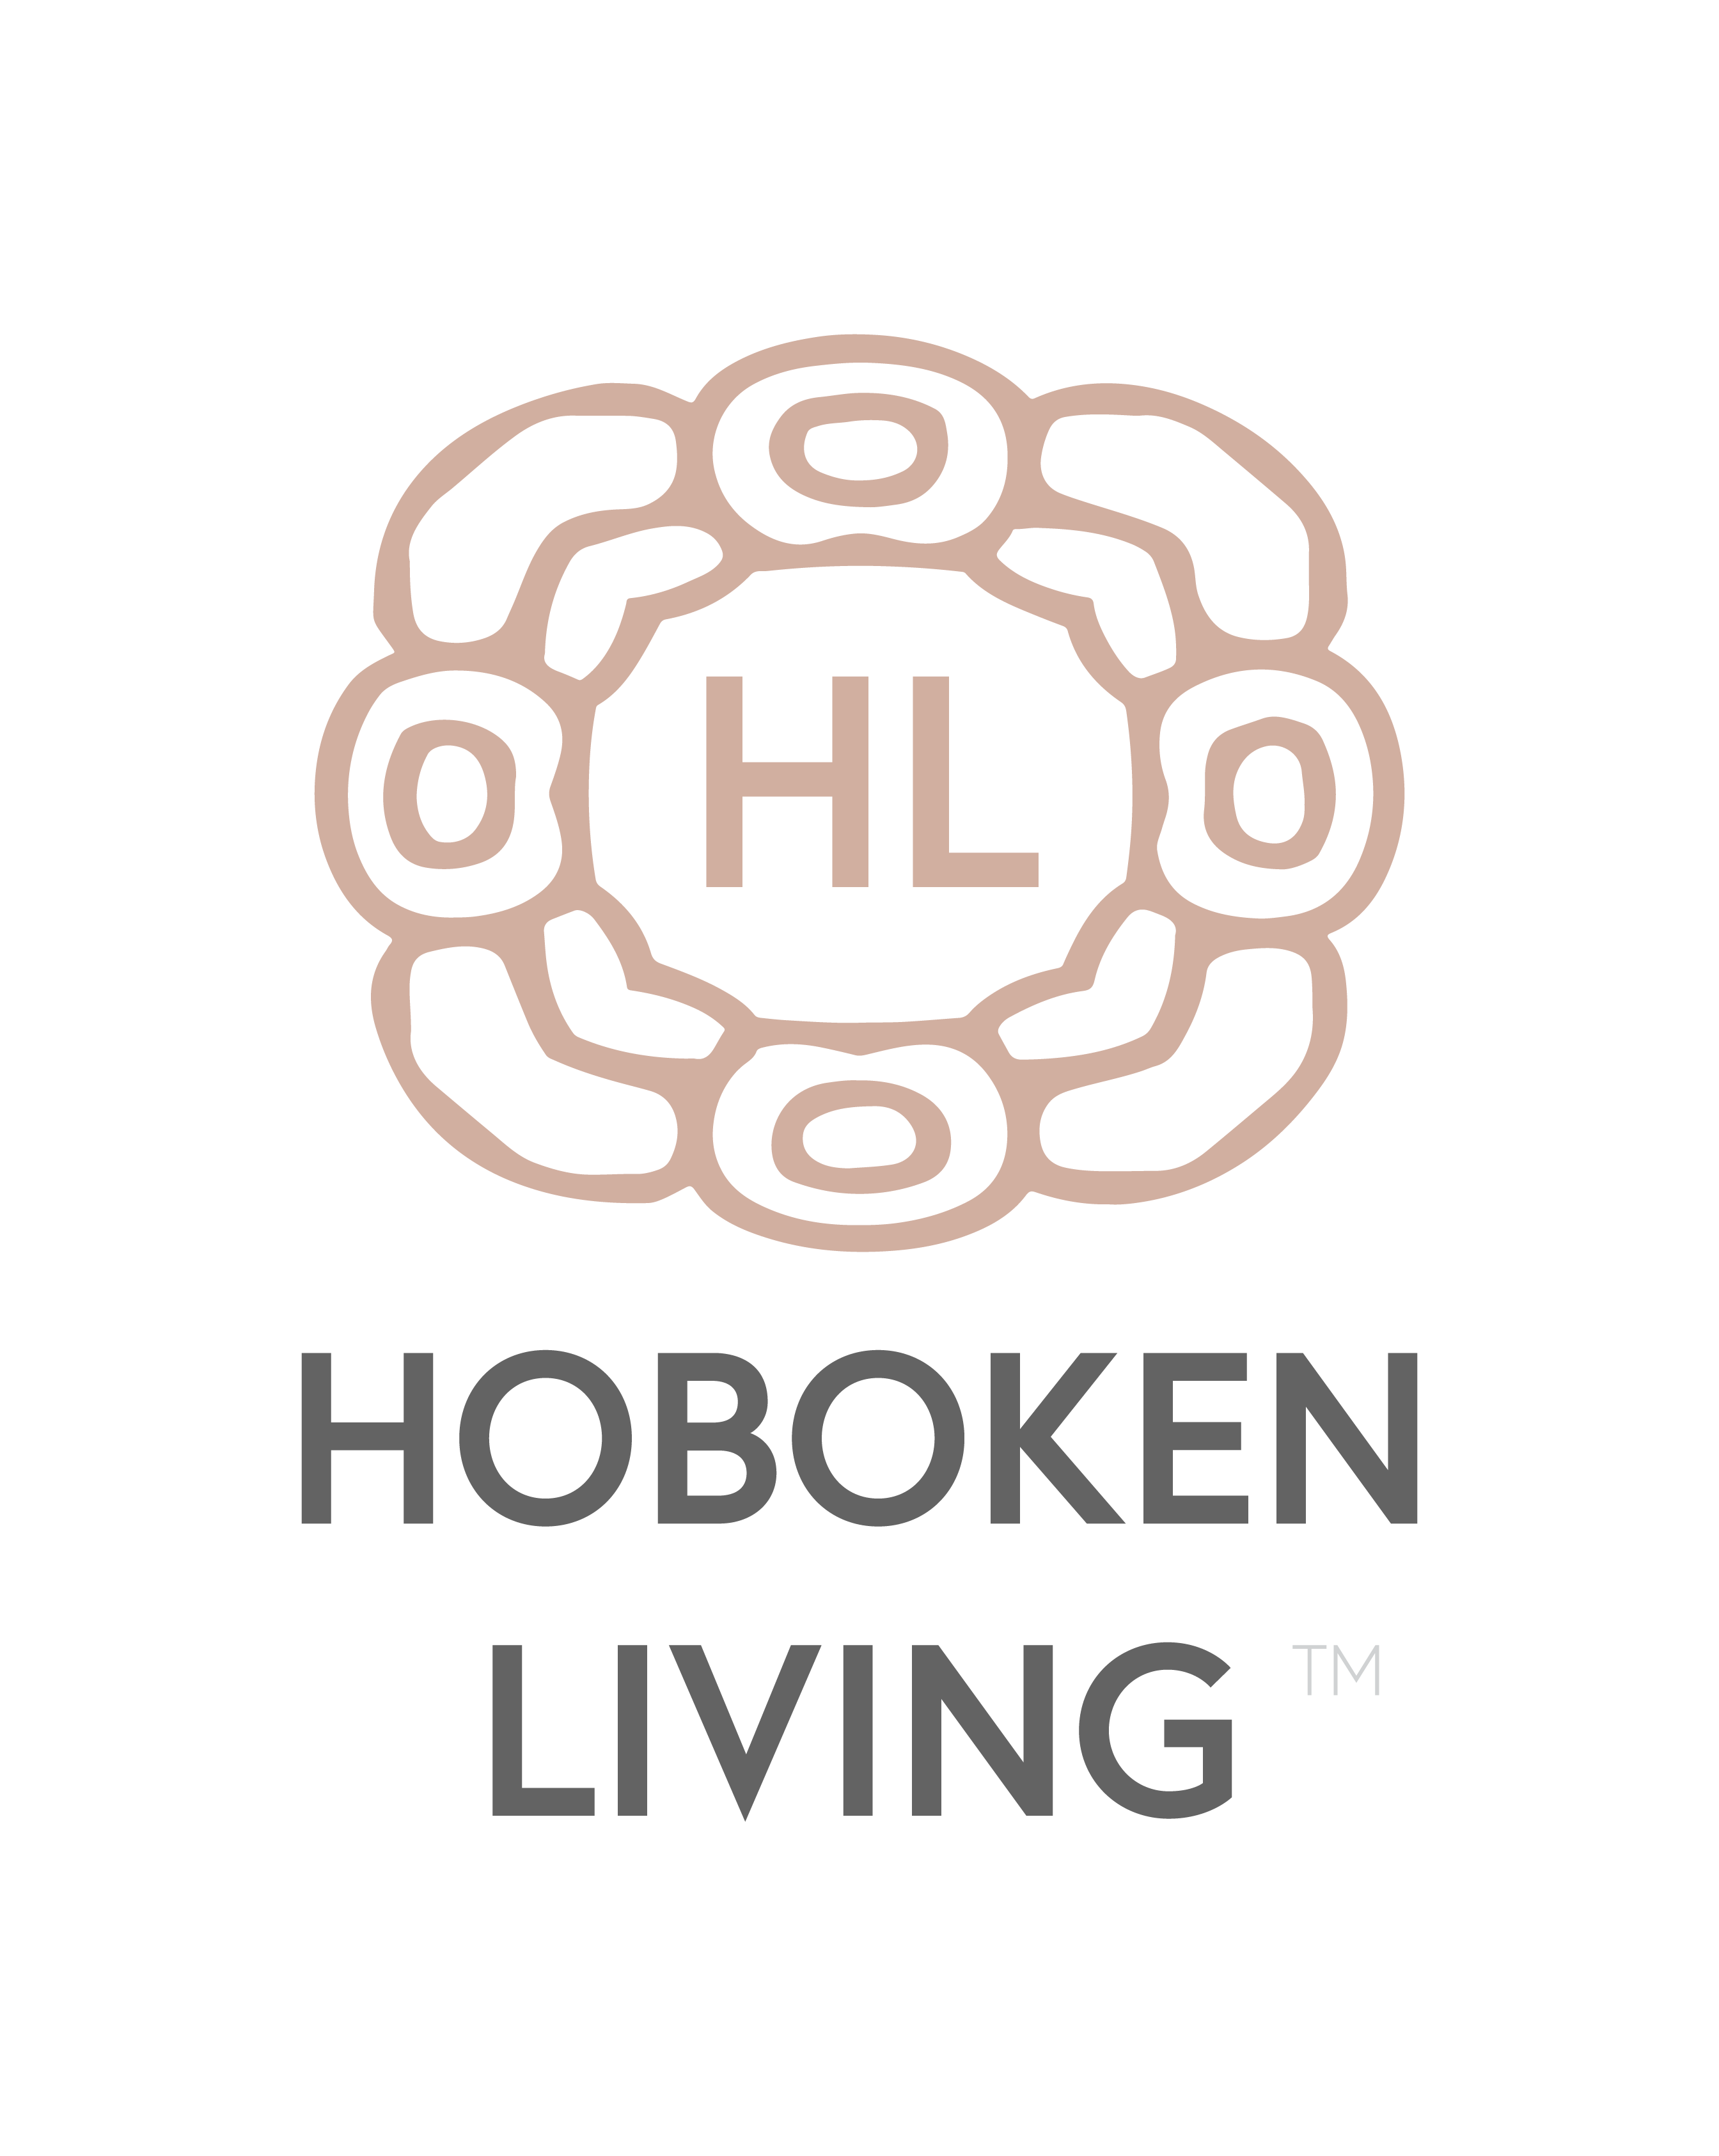 Hoboken Living Real Estate